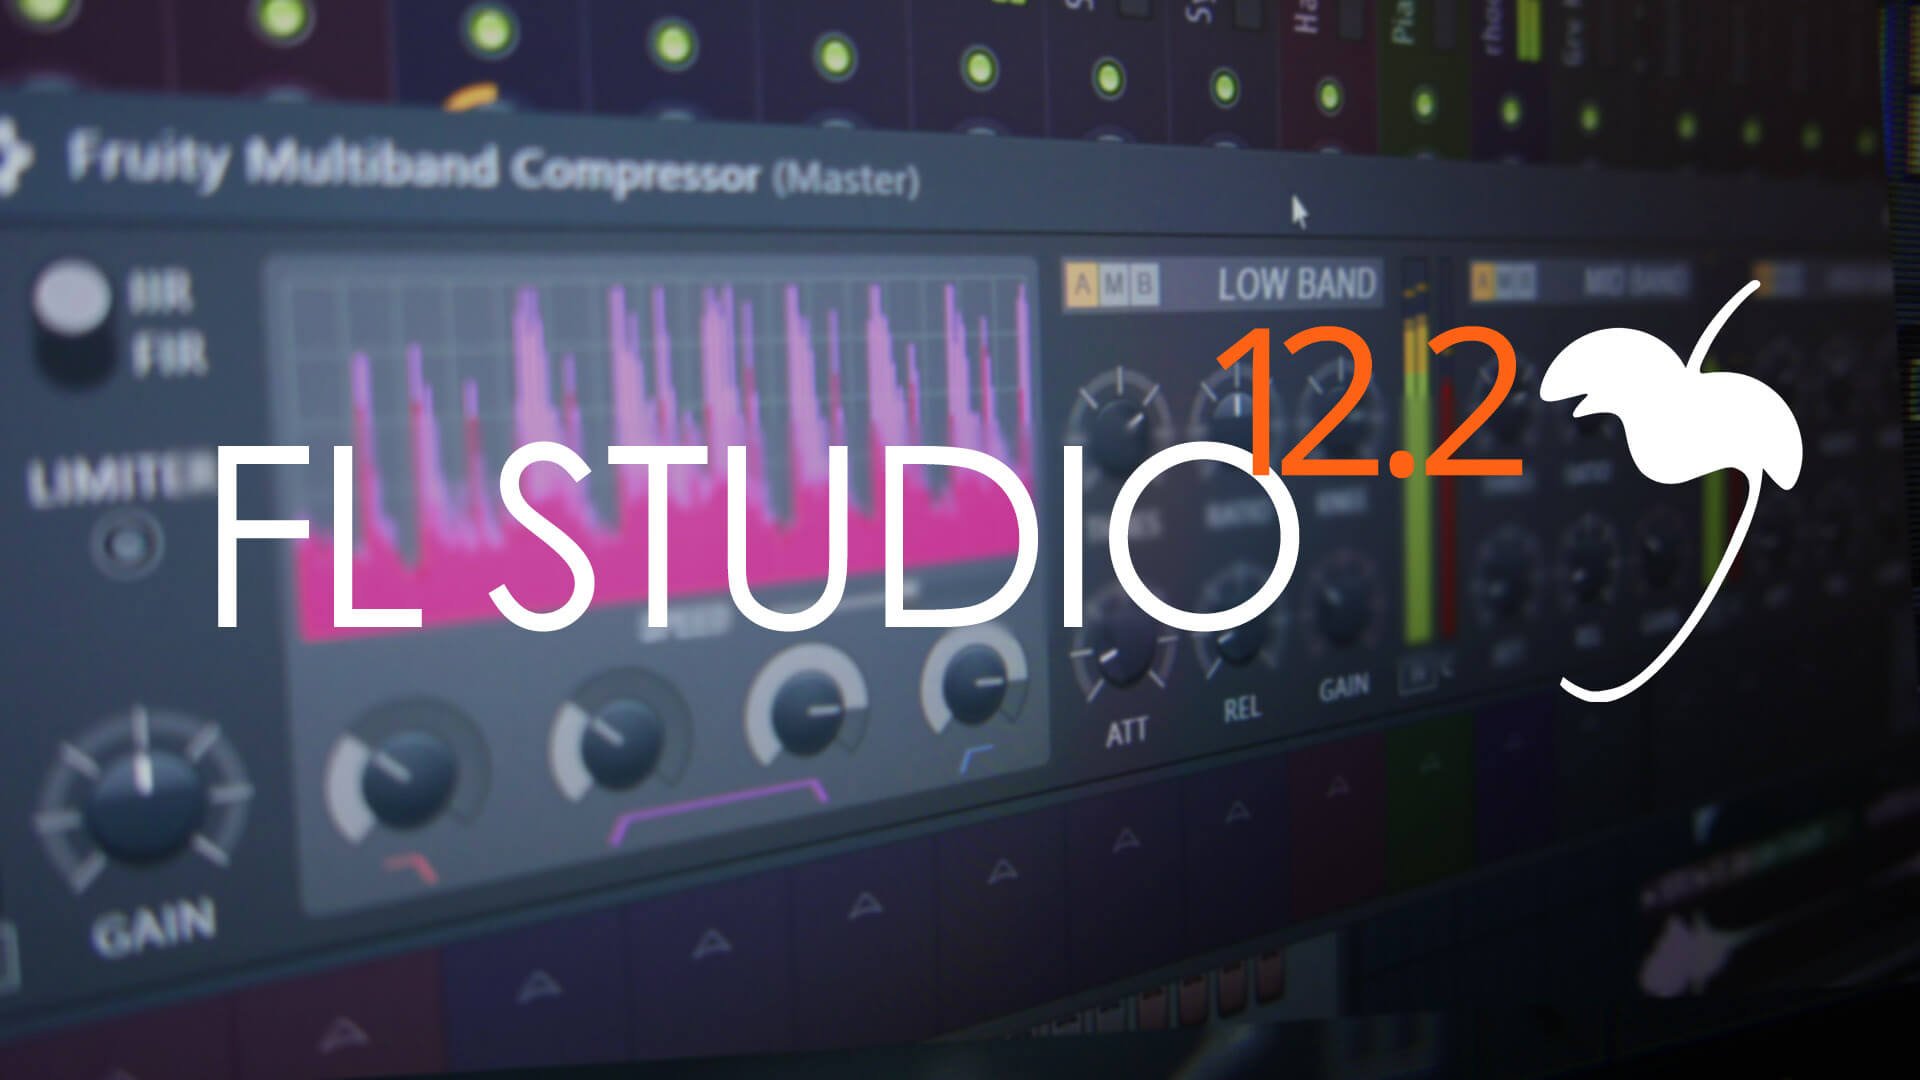 Image-Line FL Studio 12.2 released